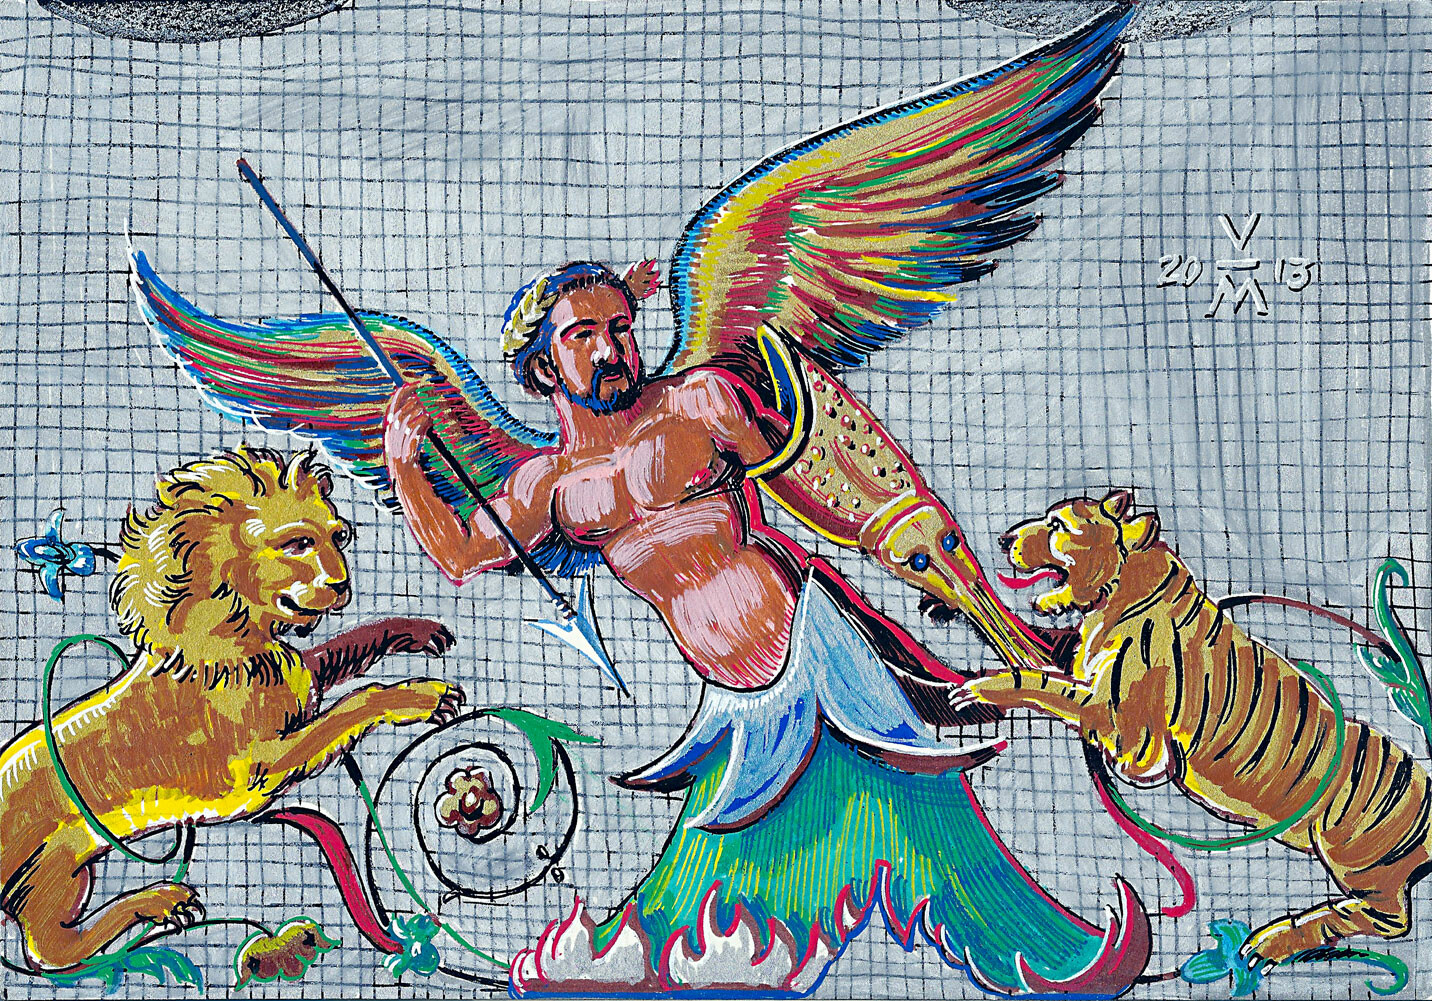 Watercolour study from a mosaic, Capo D'Orlando, Sicily, 2013.